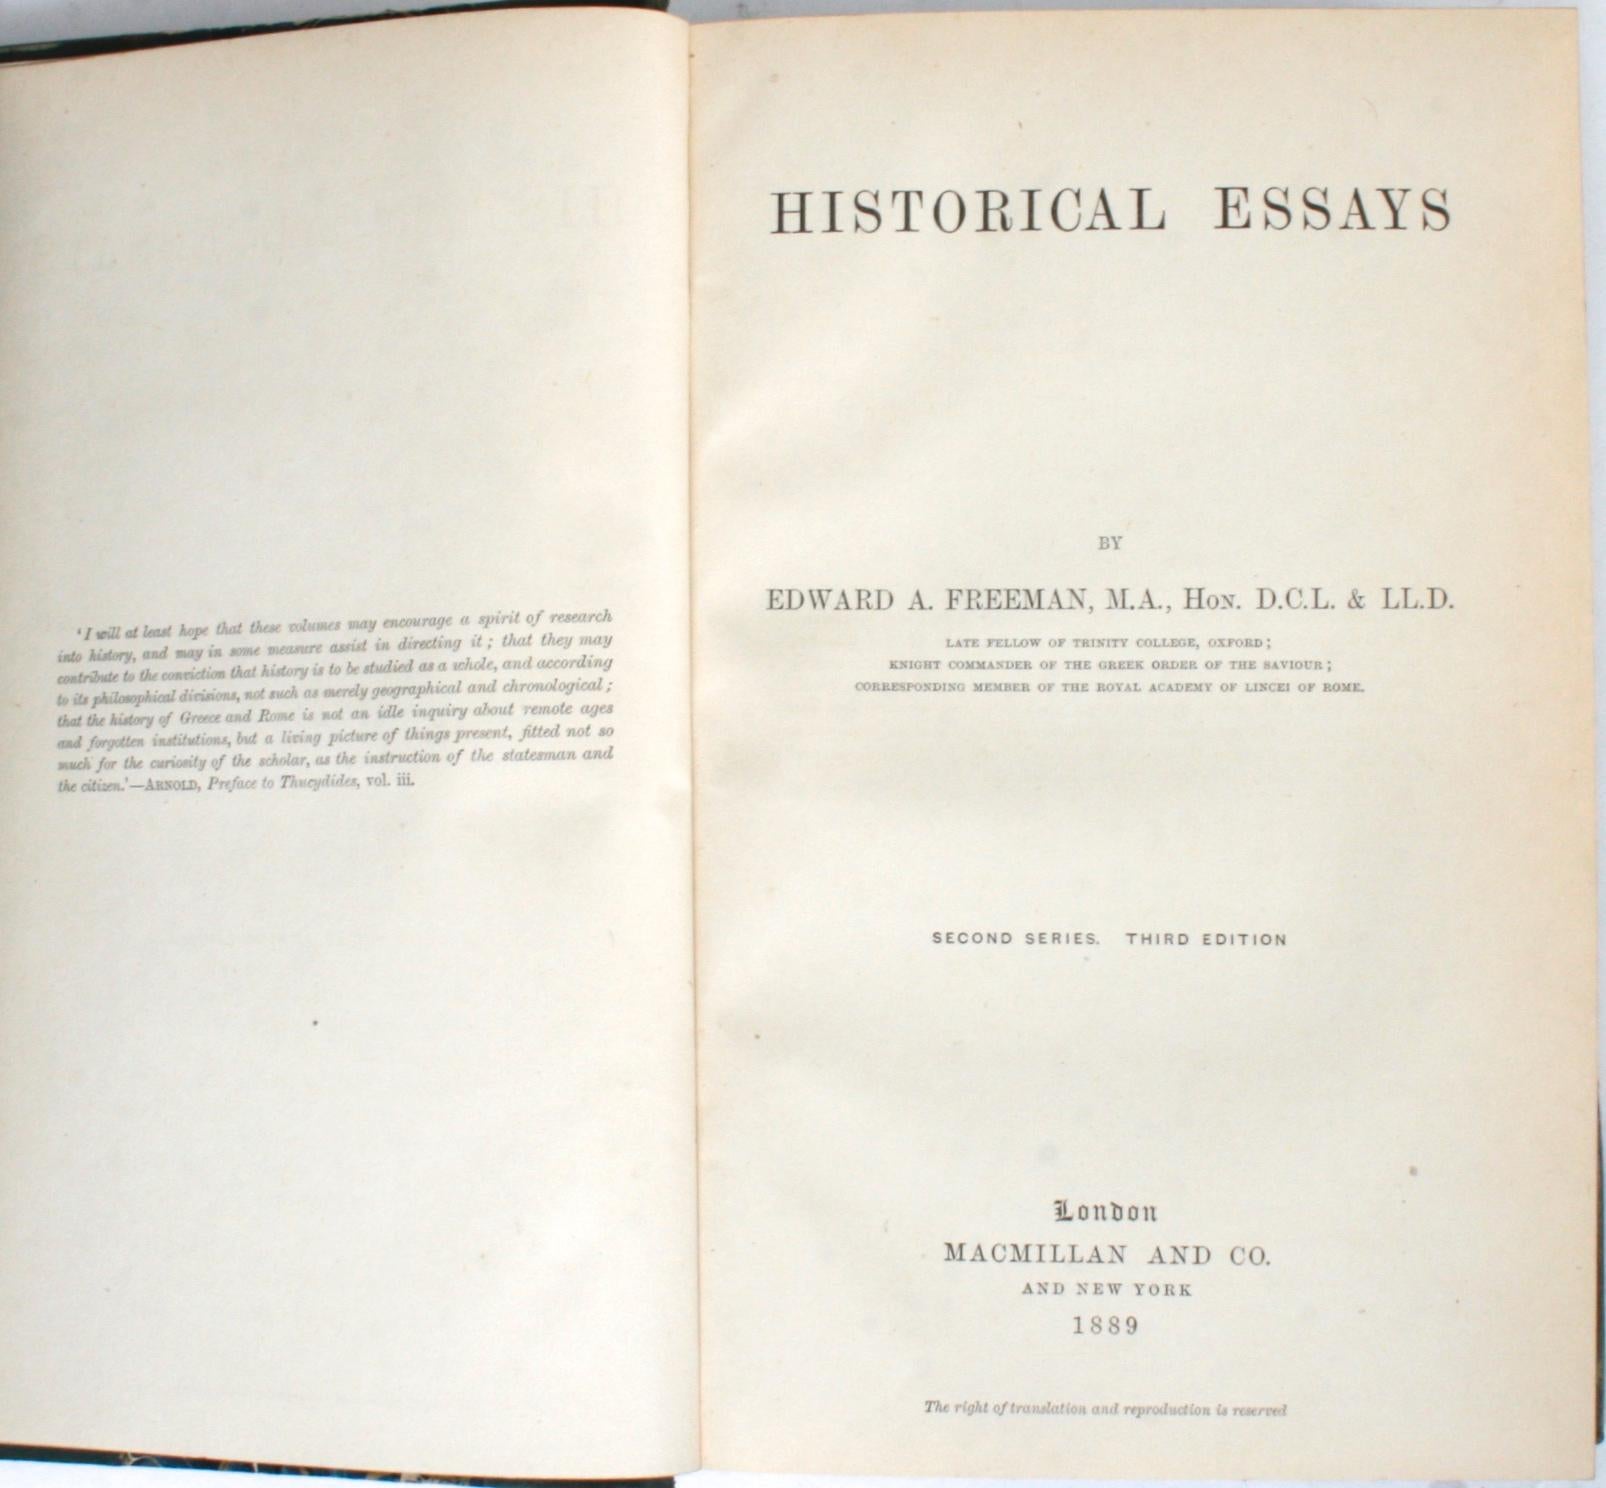 Historical Essays by Edward A. Freeman in Three Volumes 3